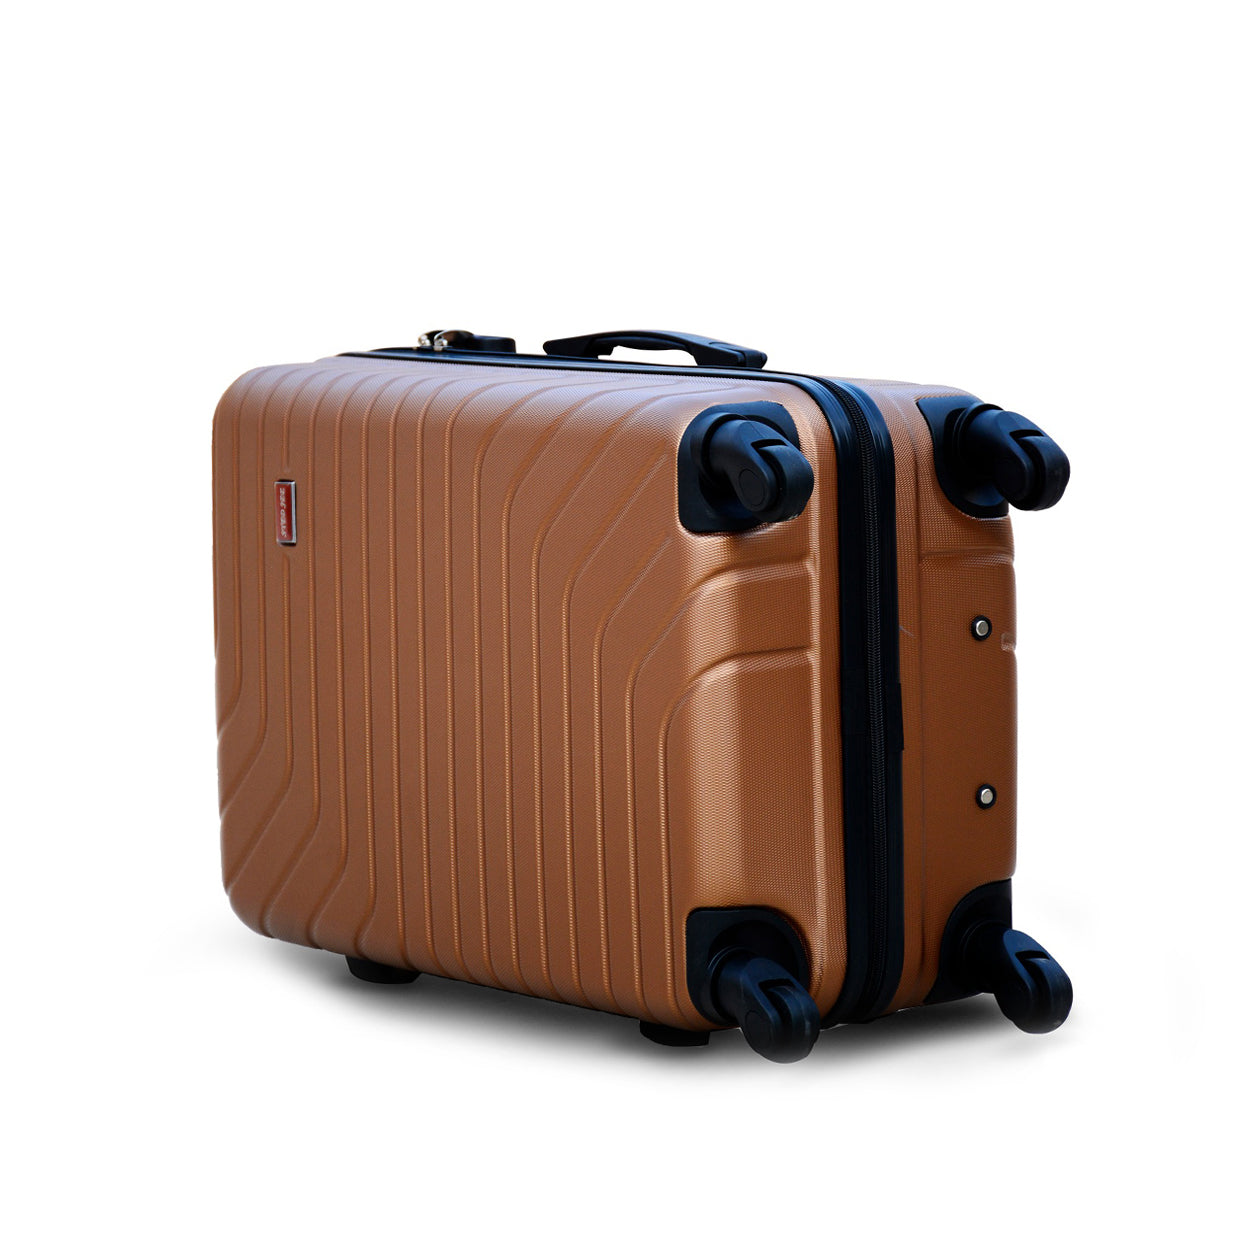 28" Coffee Colour SJ ABS Luggage Lightweight Hard Case spinner wheel Trolley Bag